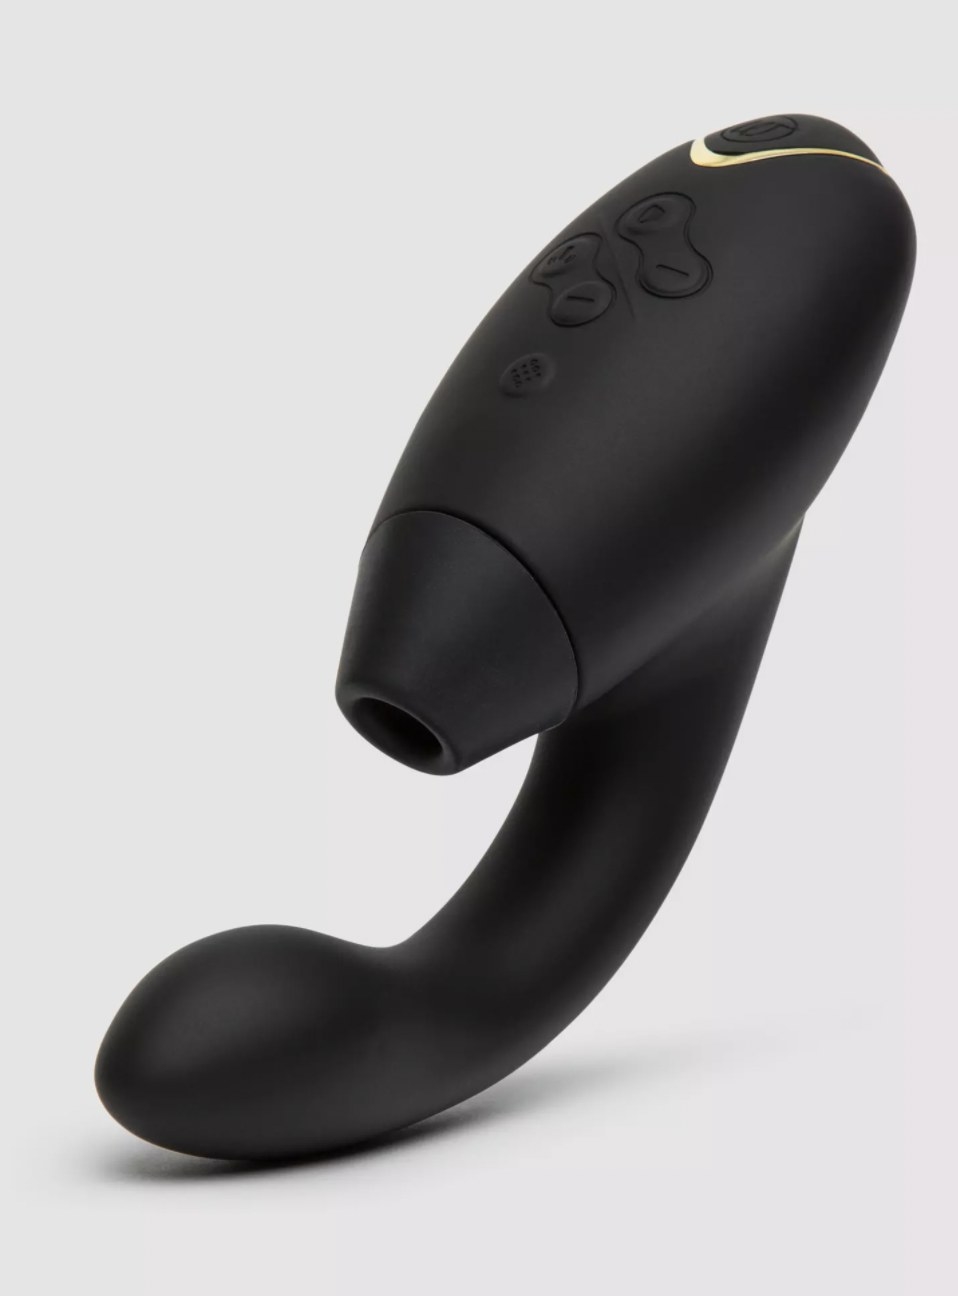 The black g-spot and clitoral vibrator